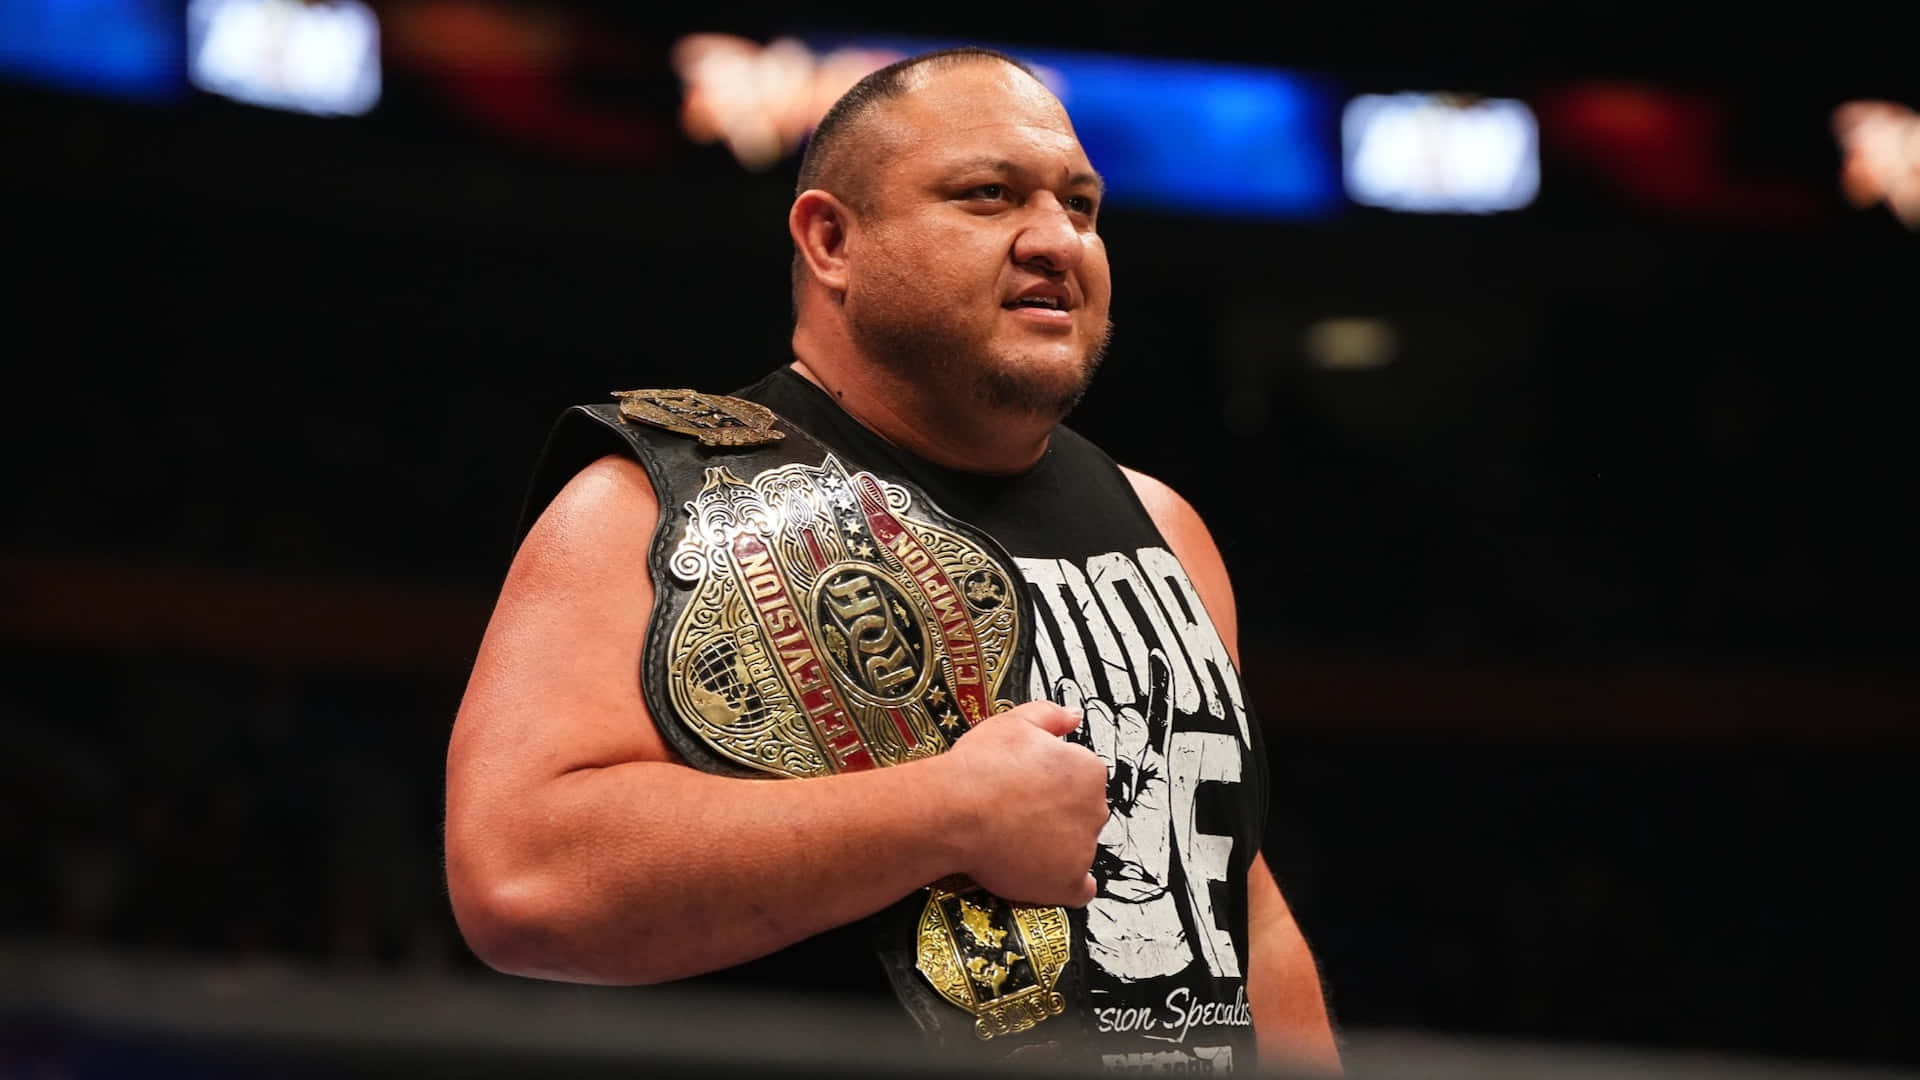 Samoa Joe Aew Championship Belt Background